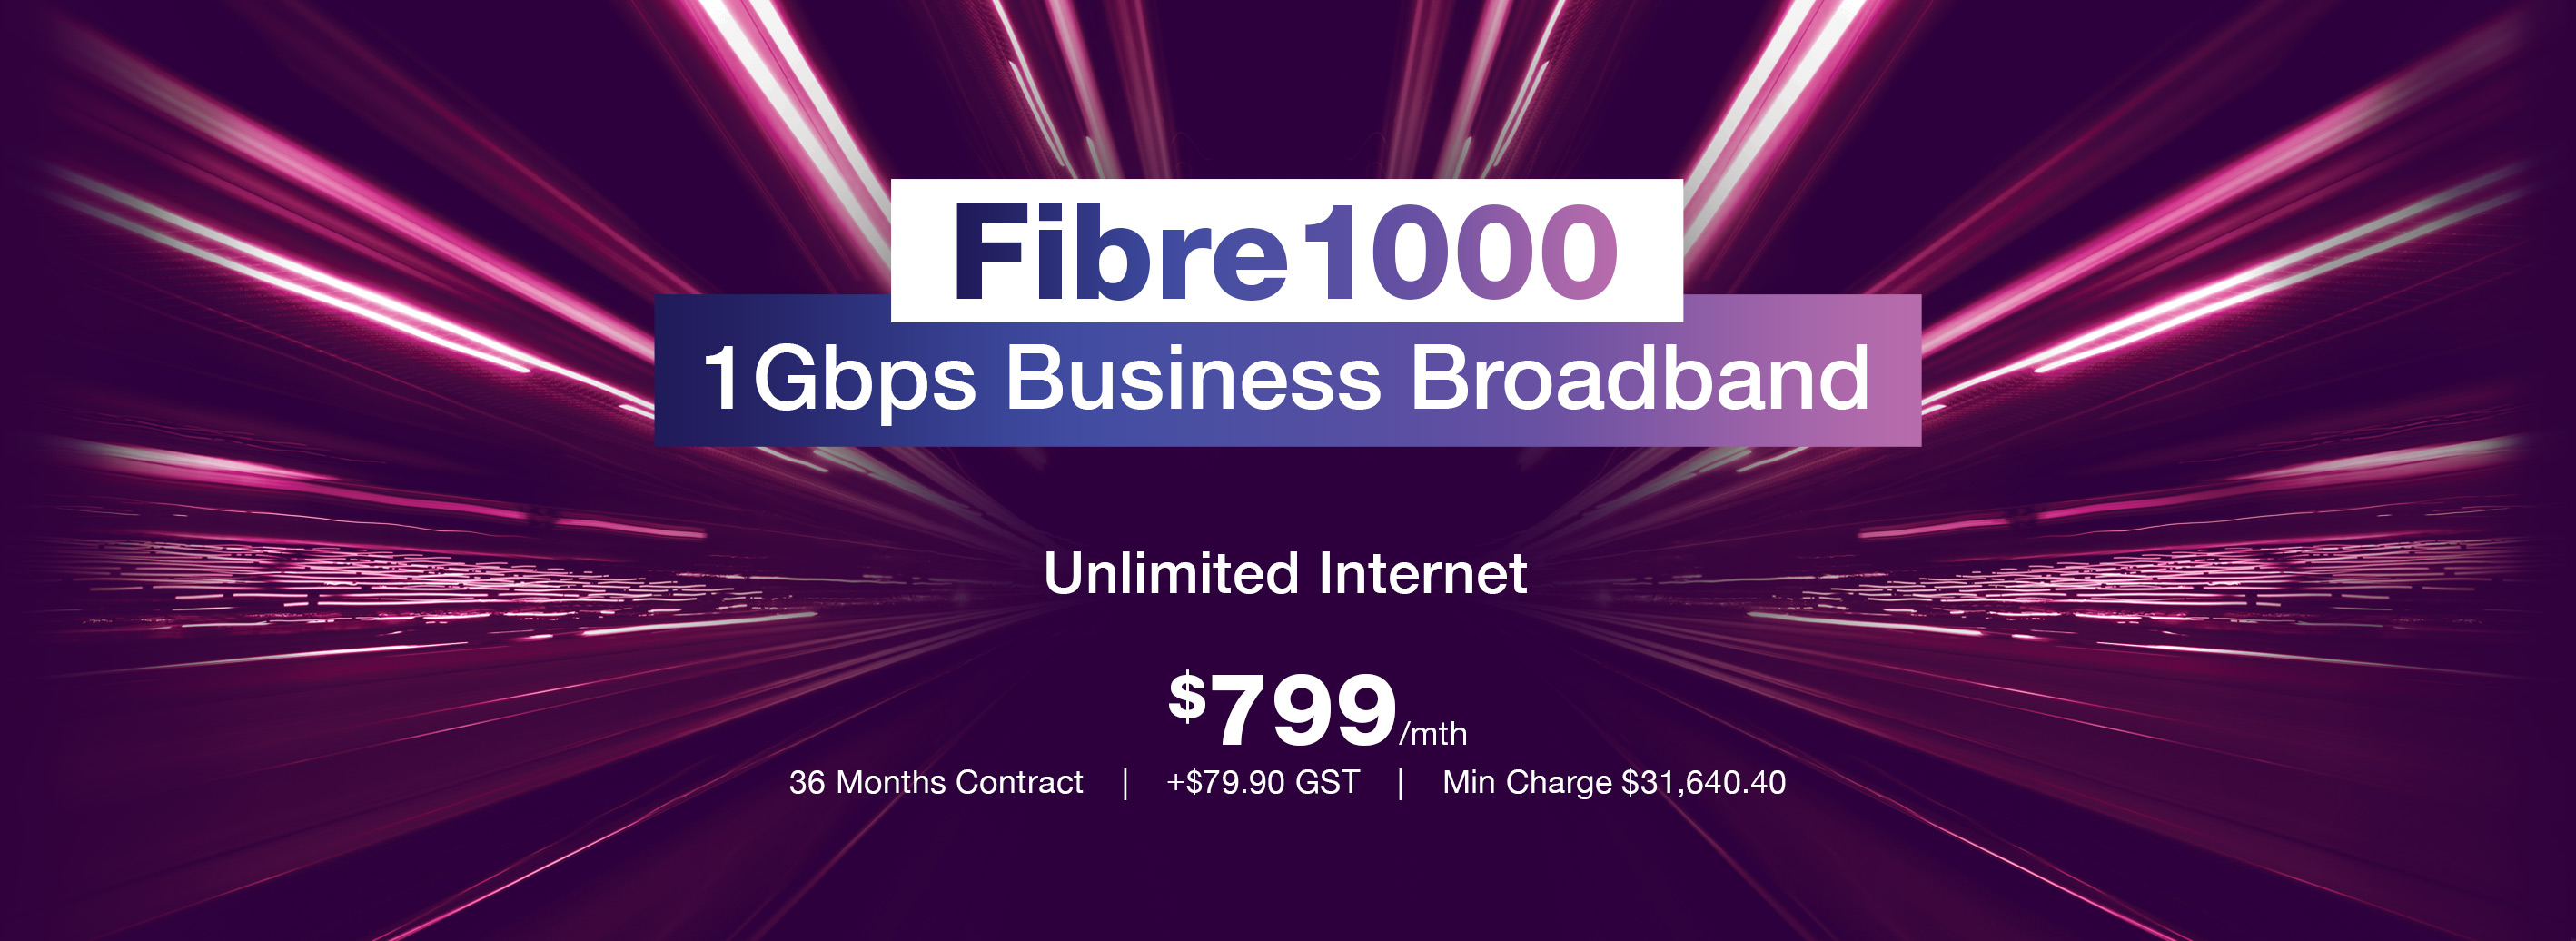 TPG Fibre1000 - 1Gbps Business Broadband